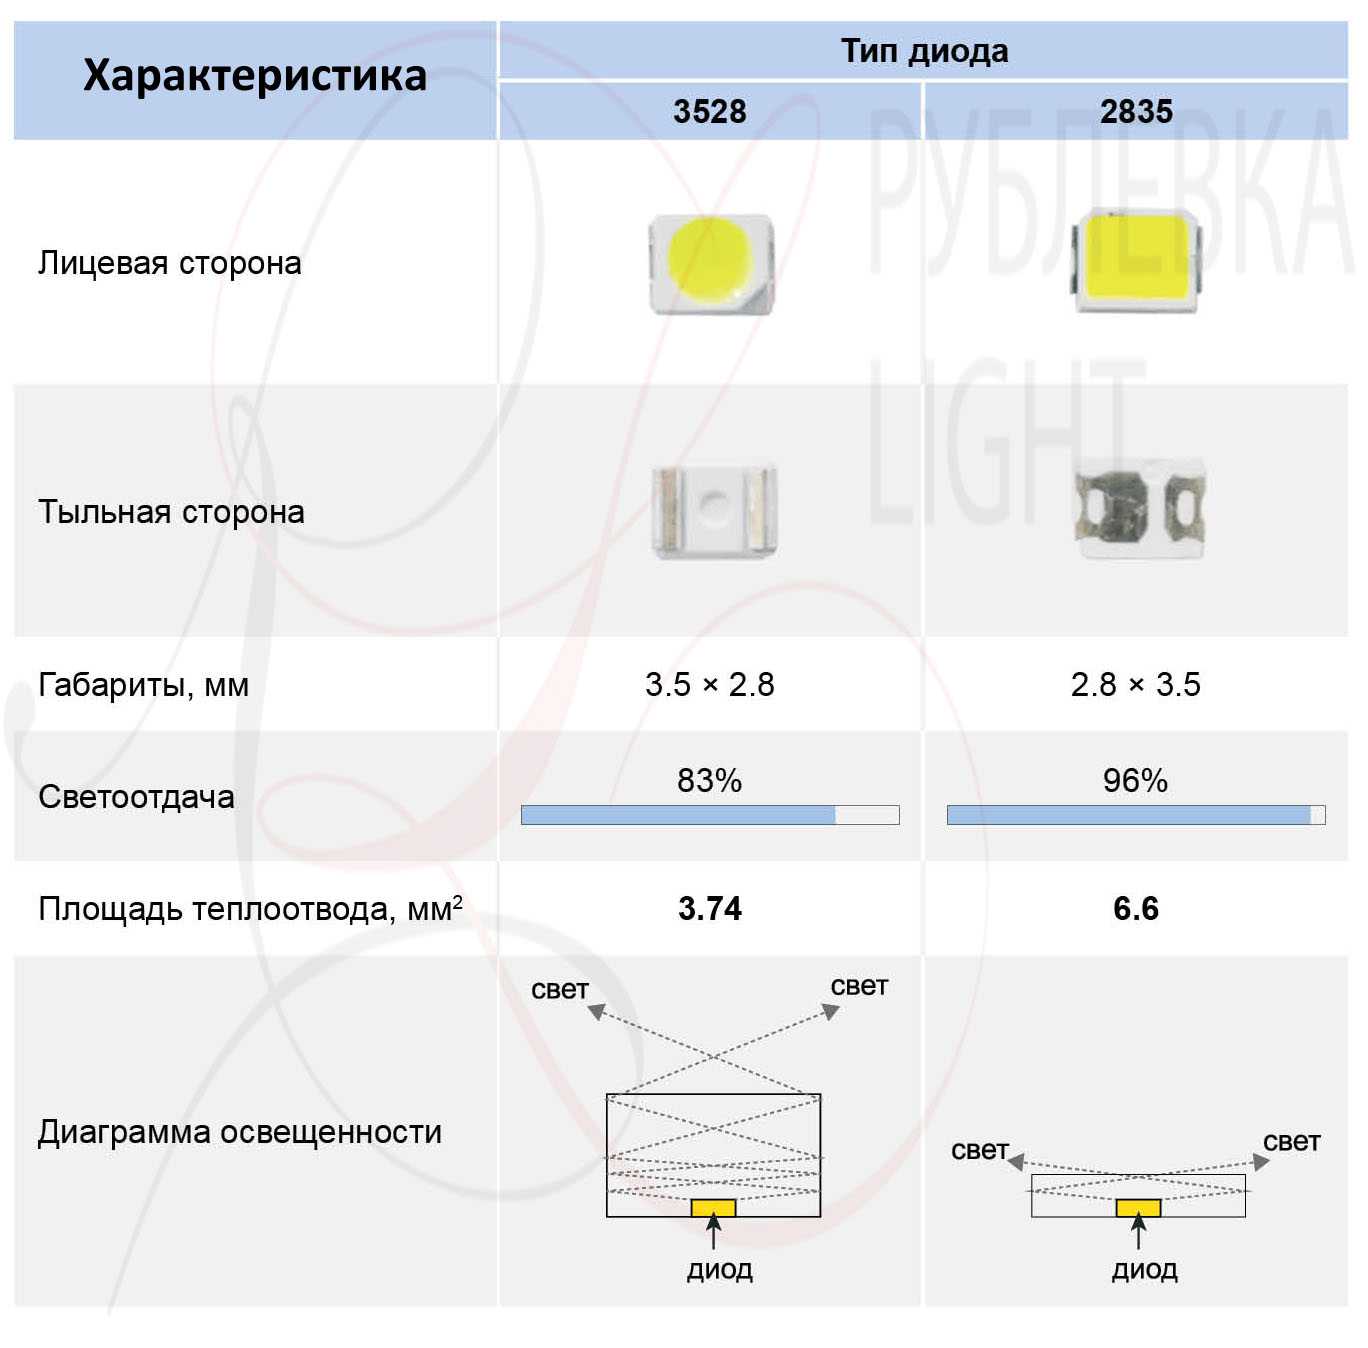 Характеристики led smd 2835 (краткий datasheet на русском)